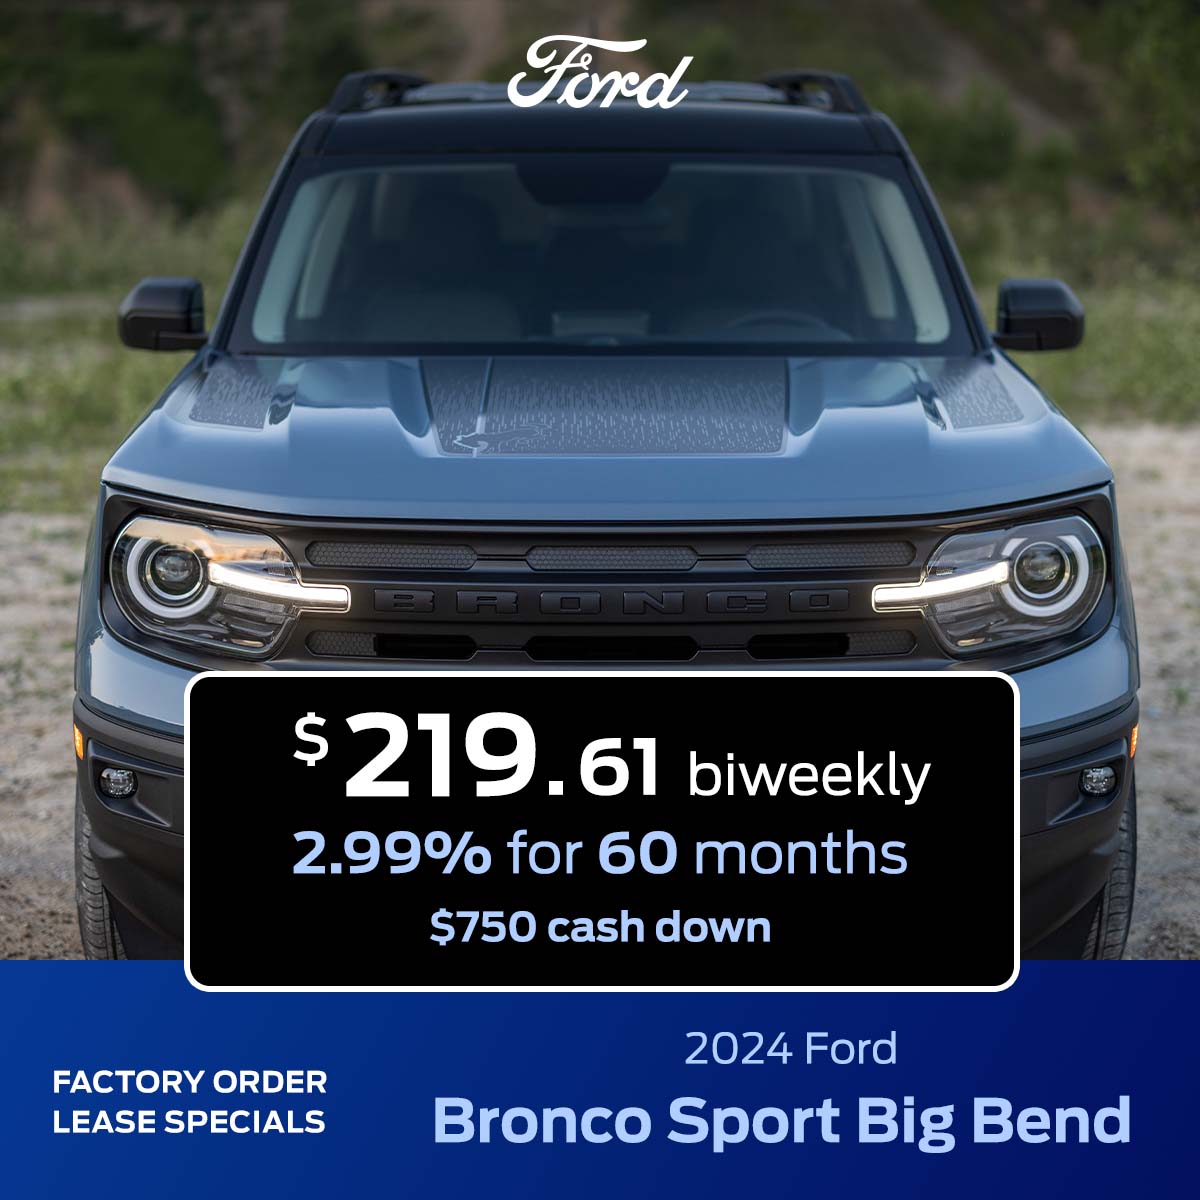 Bronco Sport Big Bend